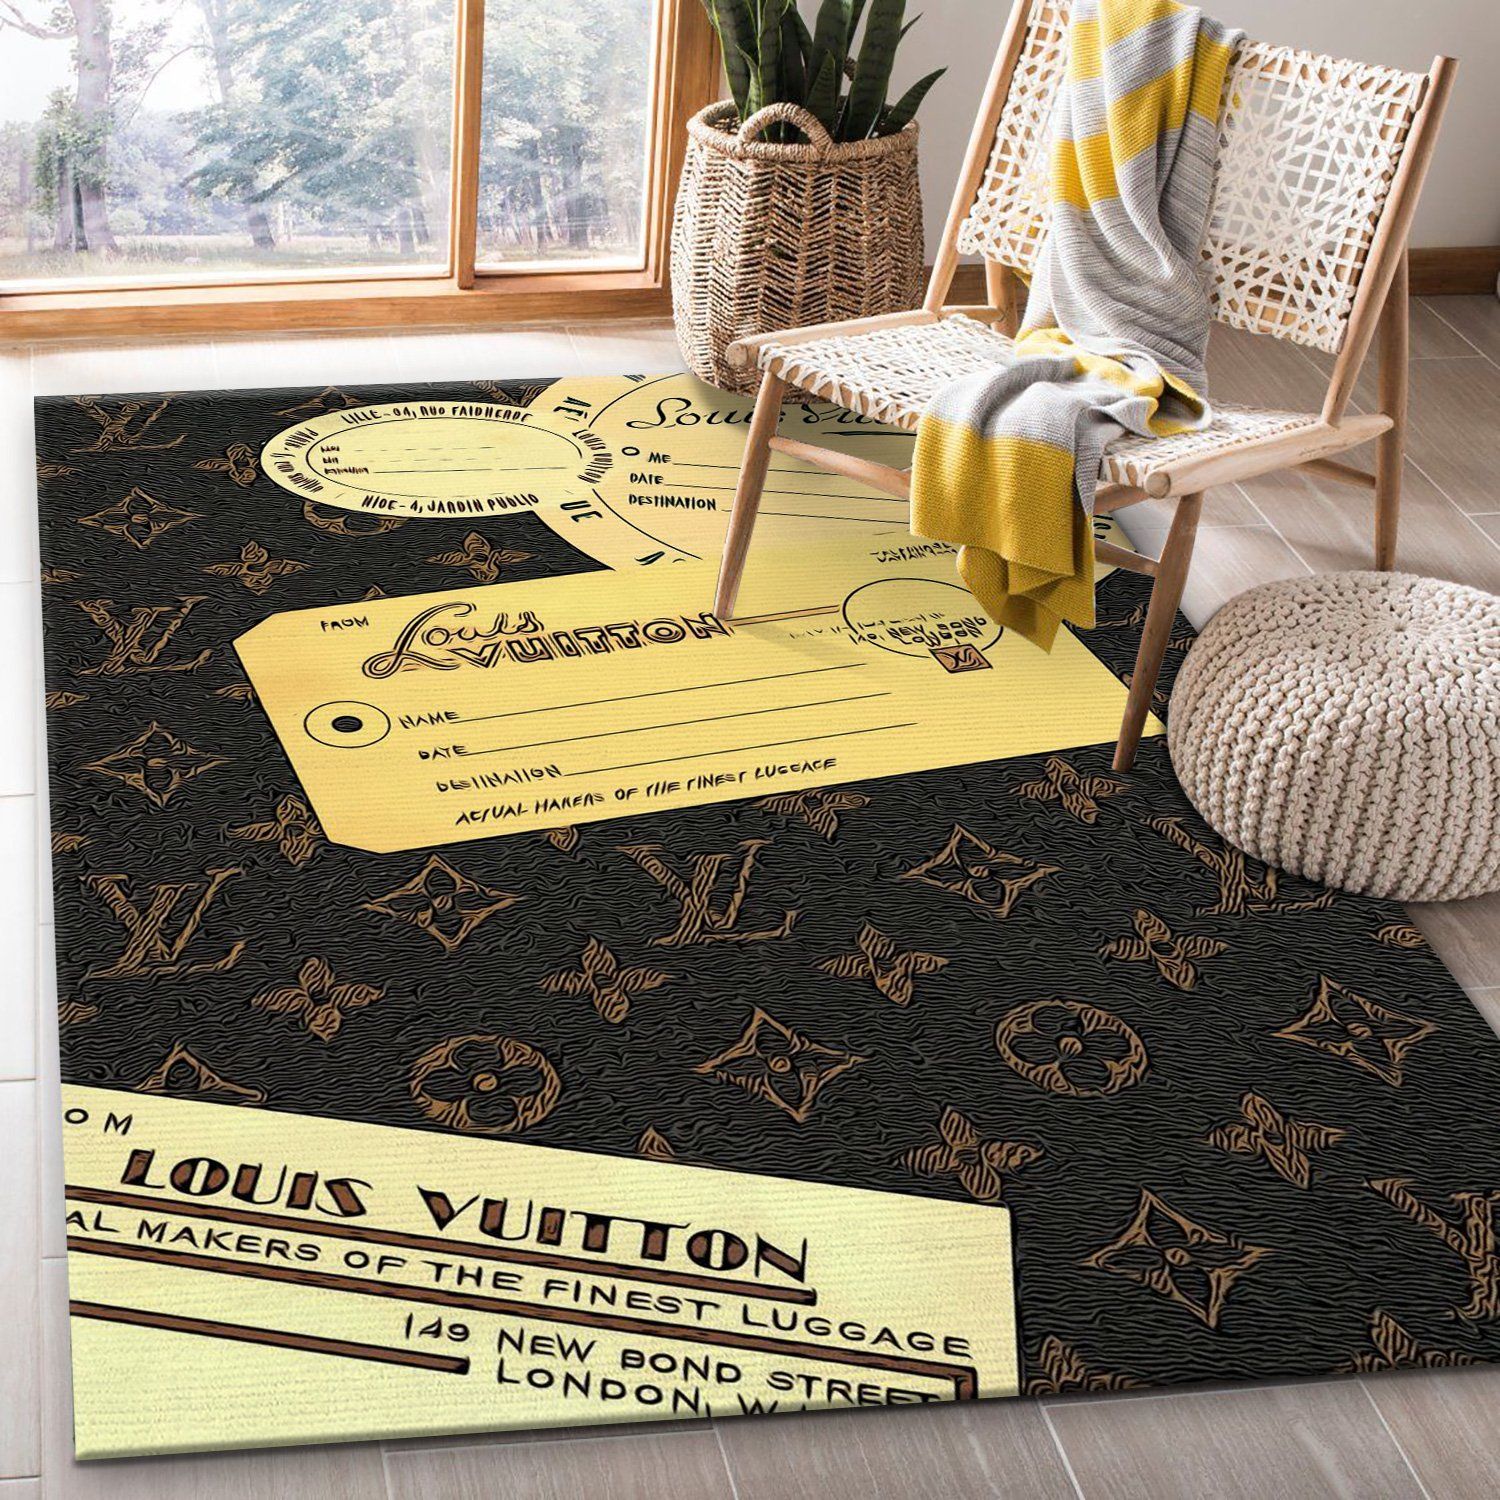 Louis Vuitton Brown Luxury Brand Fashion Round Rug Carpet Home Decor-105608, by Cootie Shop